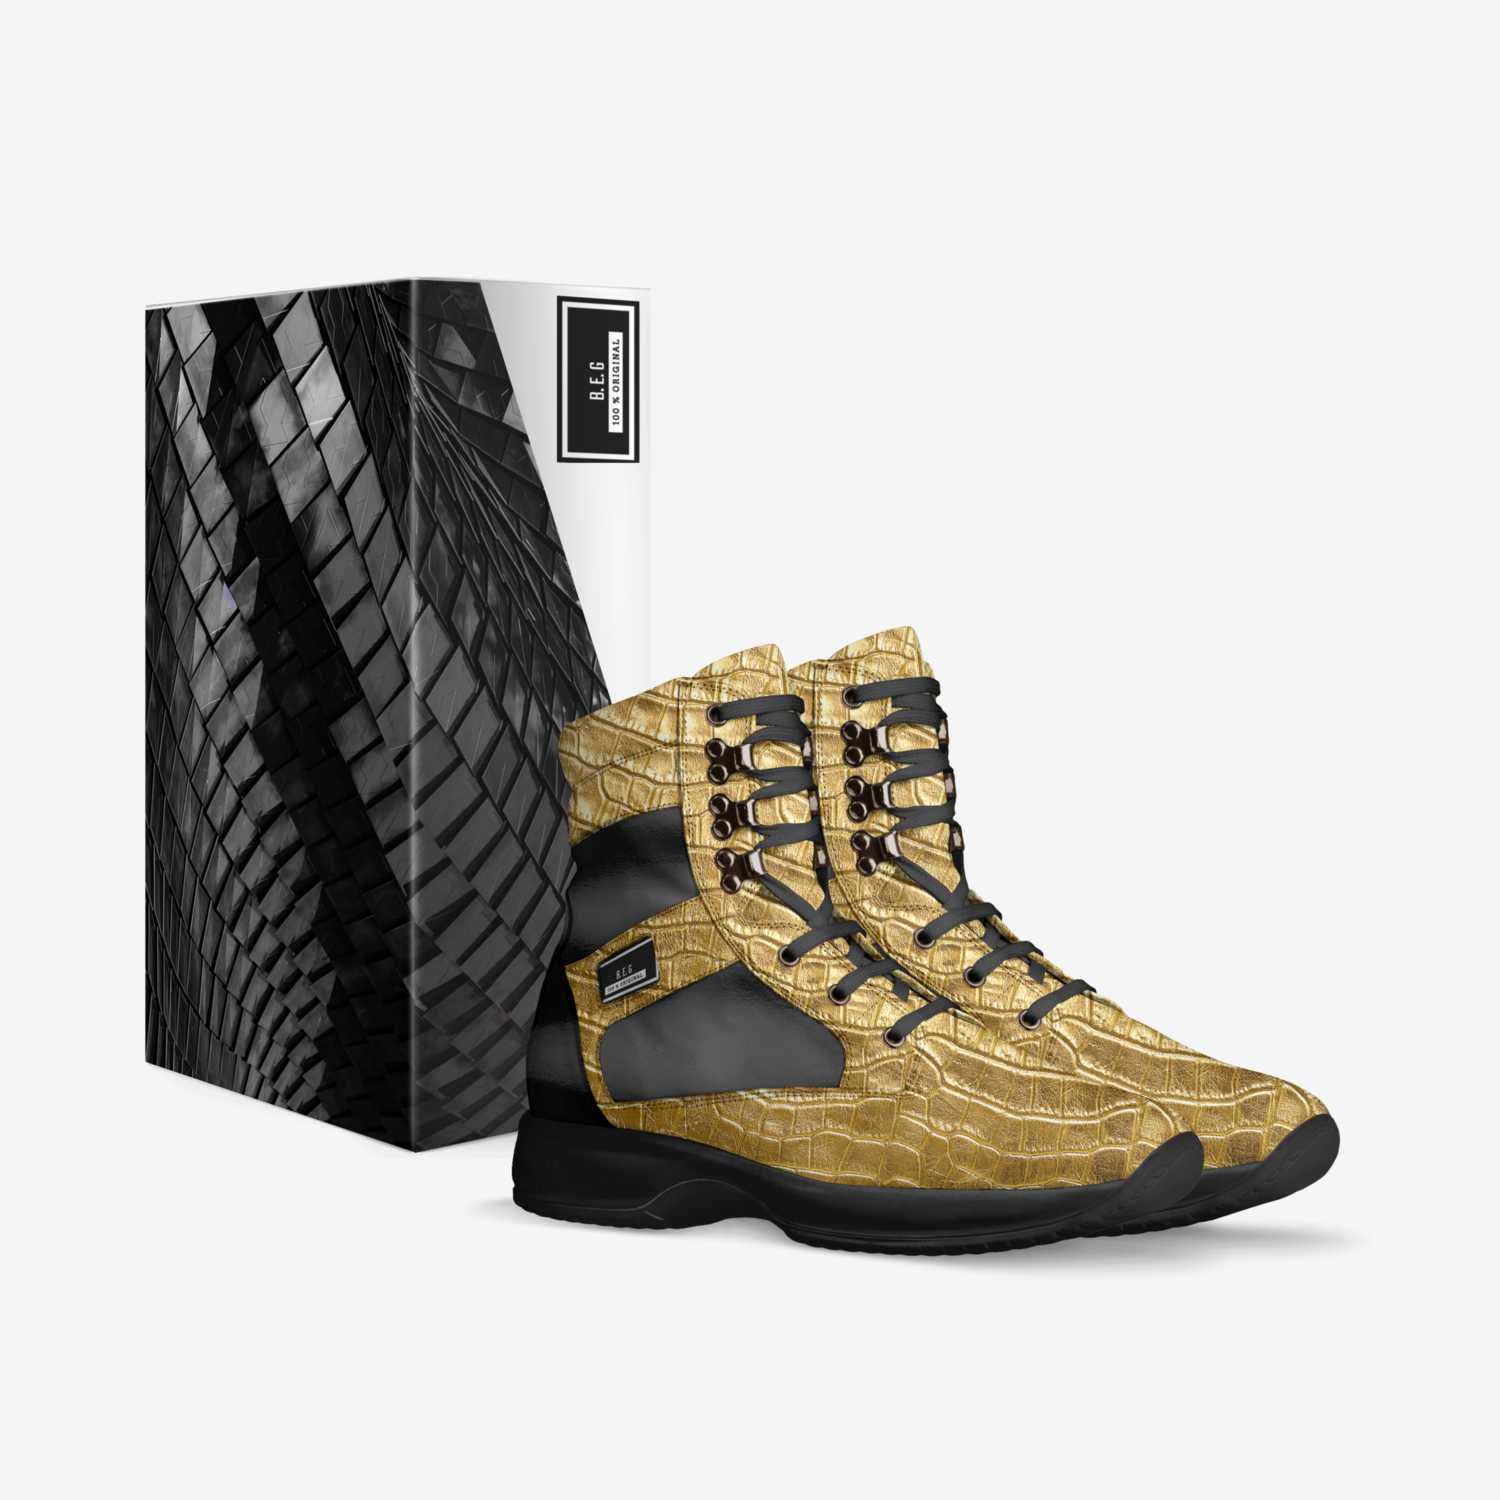 Yaba custom made in Italy shoes by Rebecca Molera | Box view